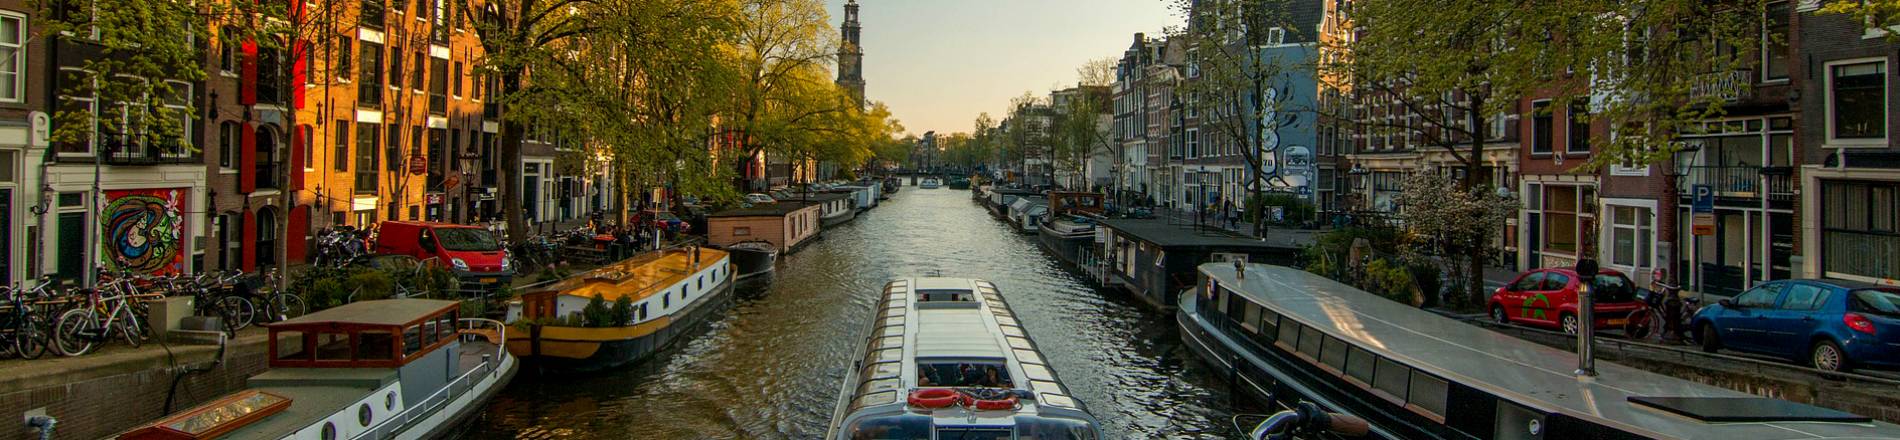 Amsterdam i izlet u Giethoorn 5 dana